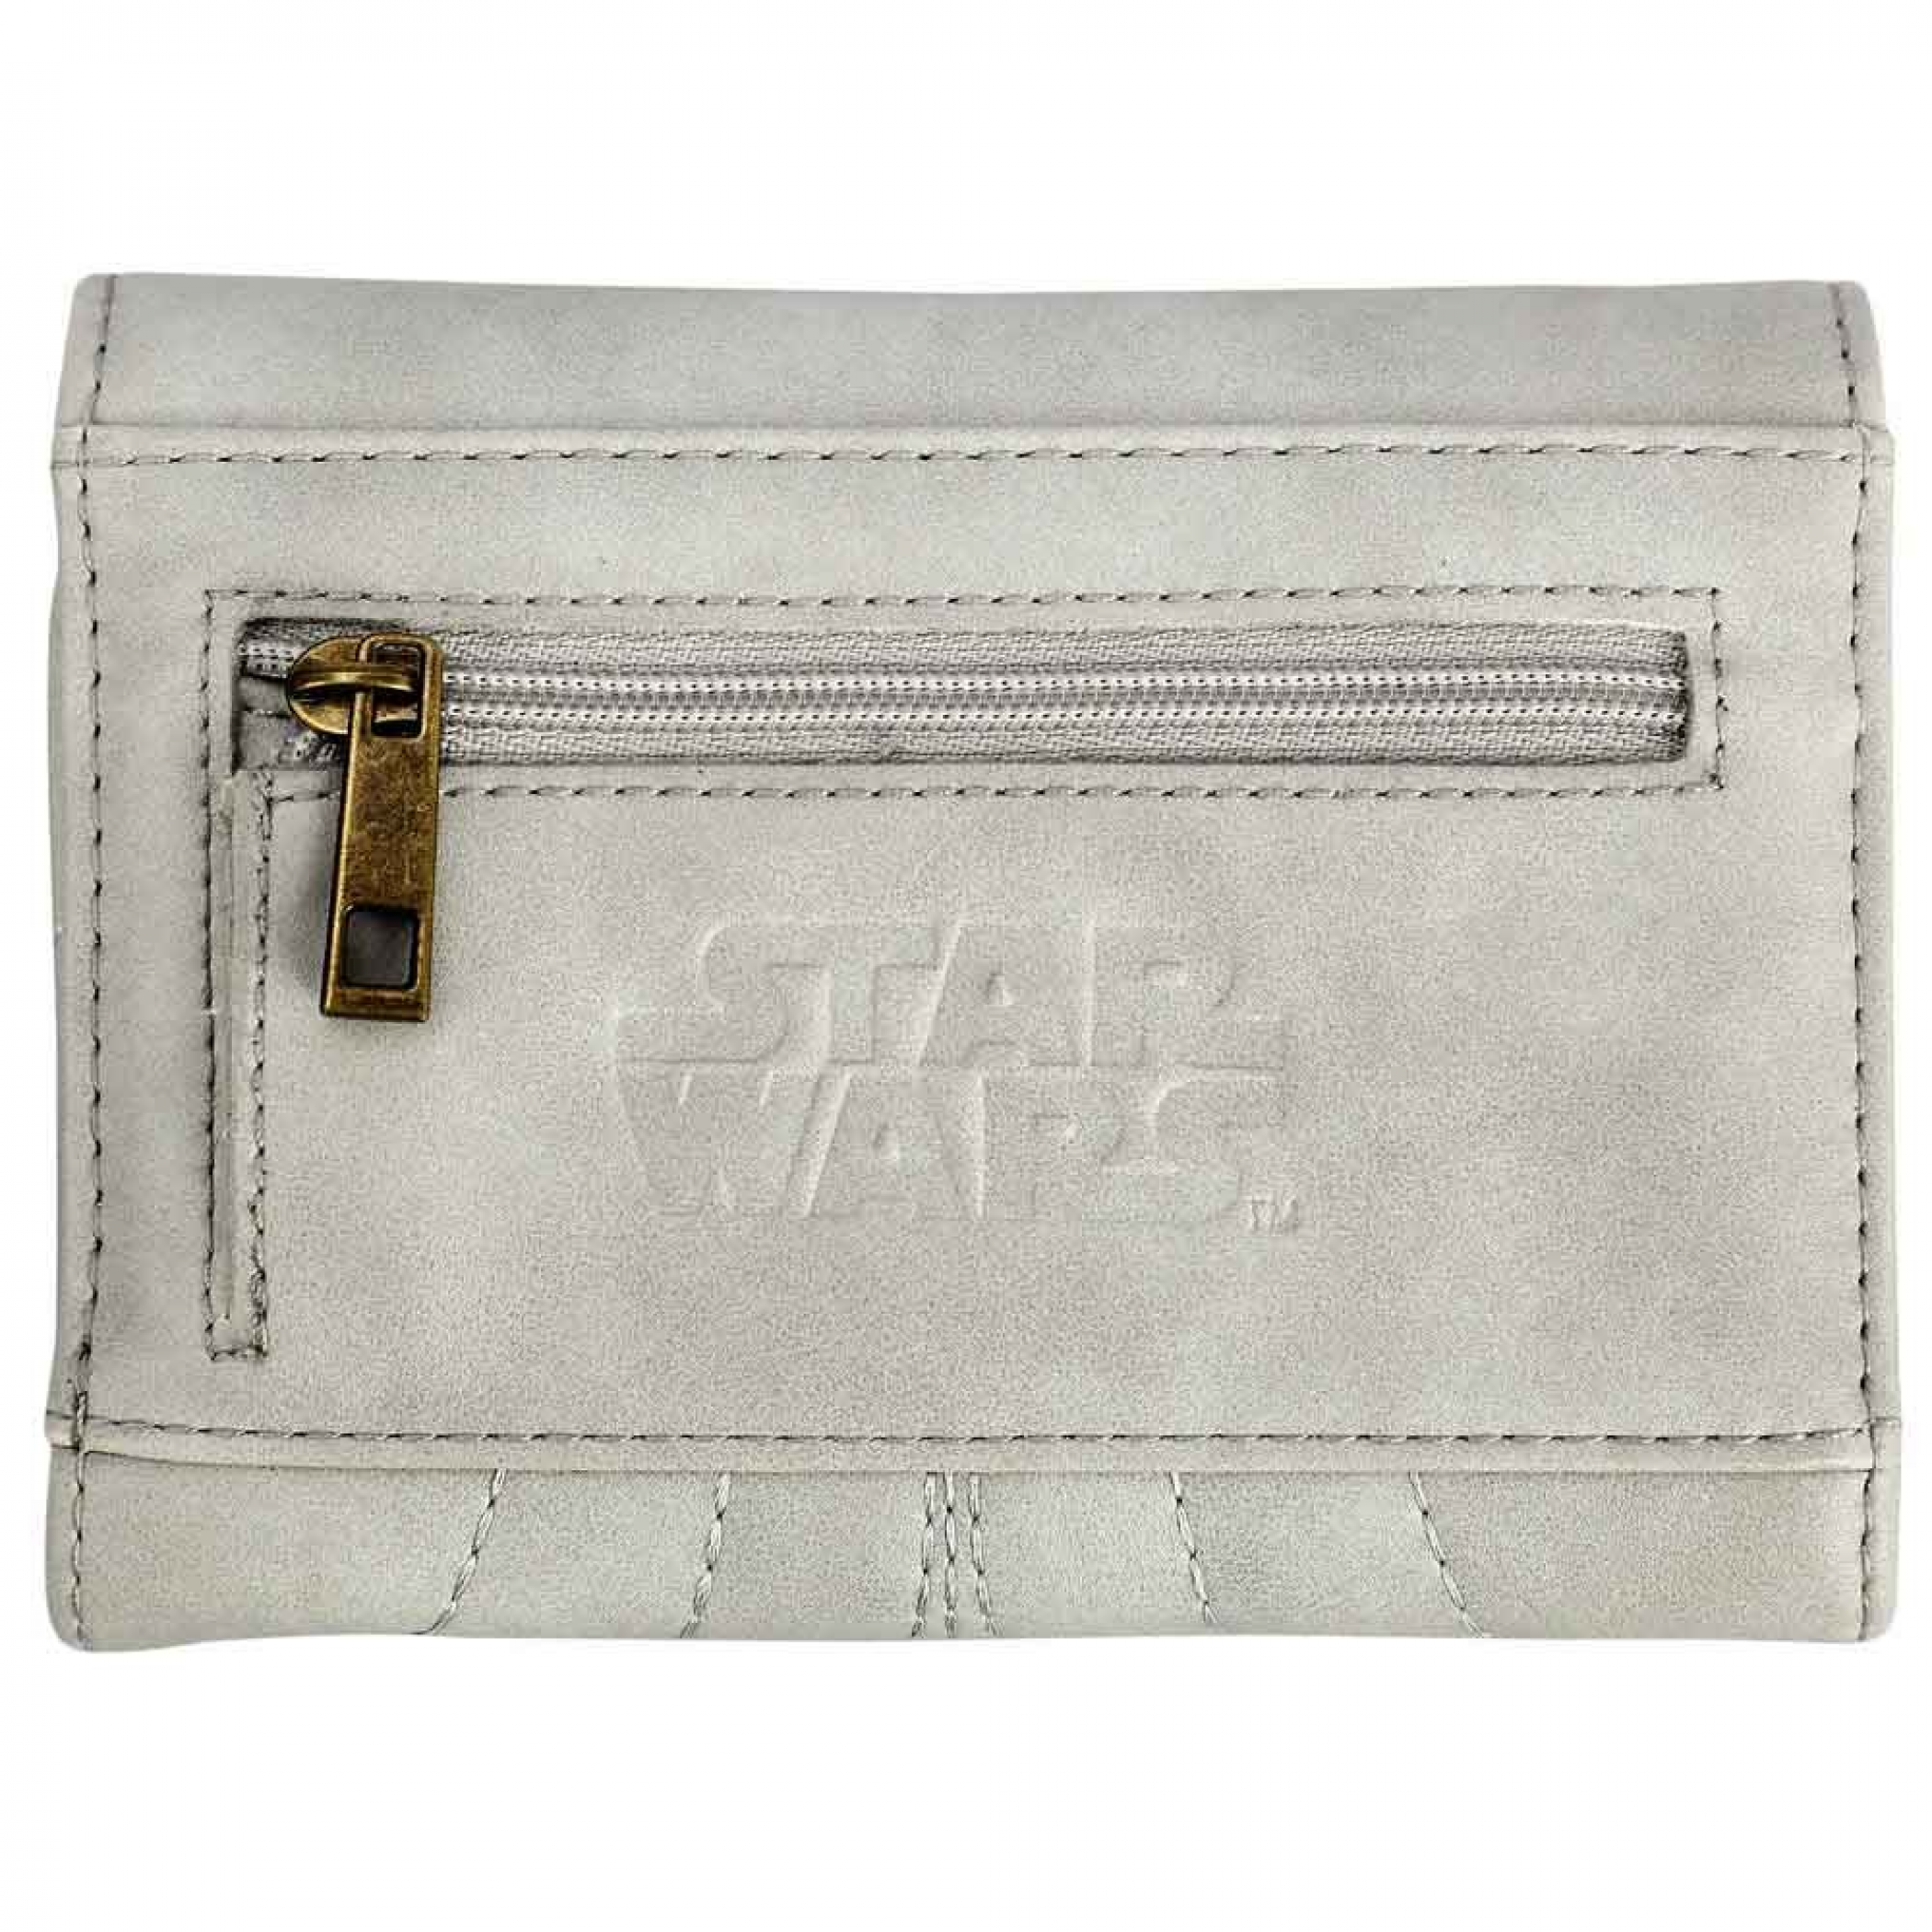 Star Wars Princess Leia Inspired w/ Rebel Alliance Logo Wallet